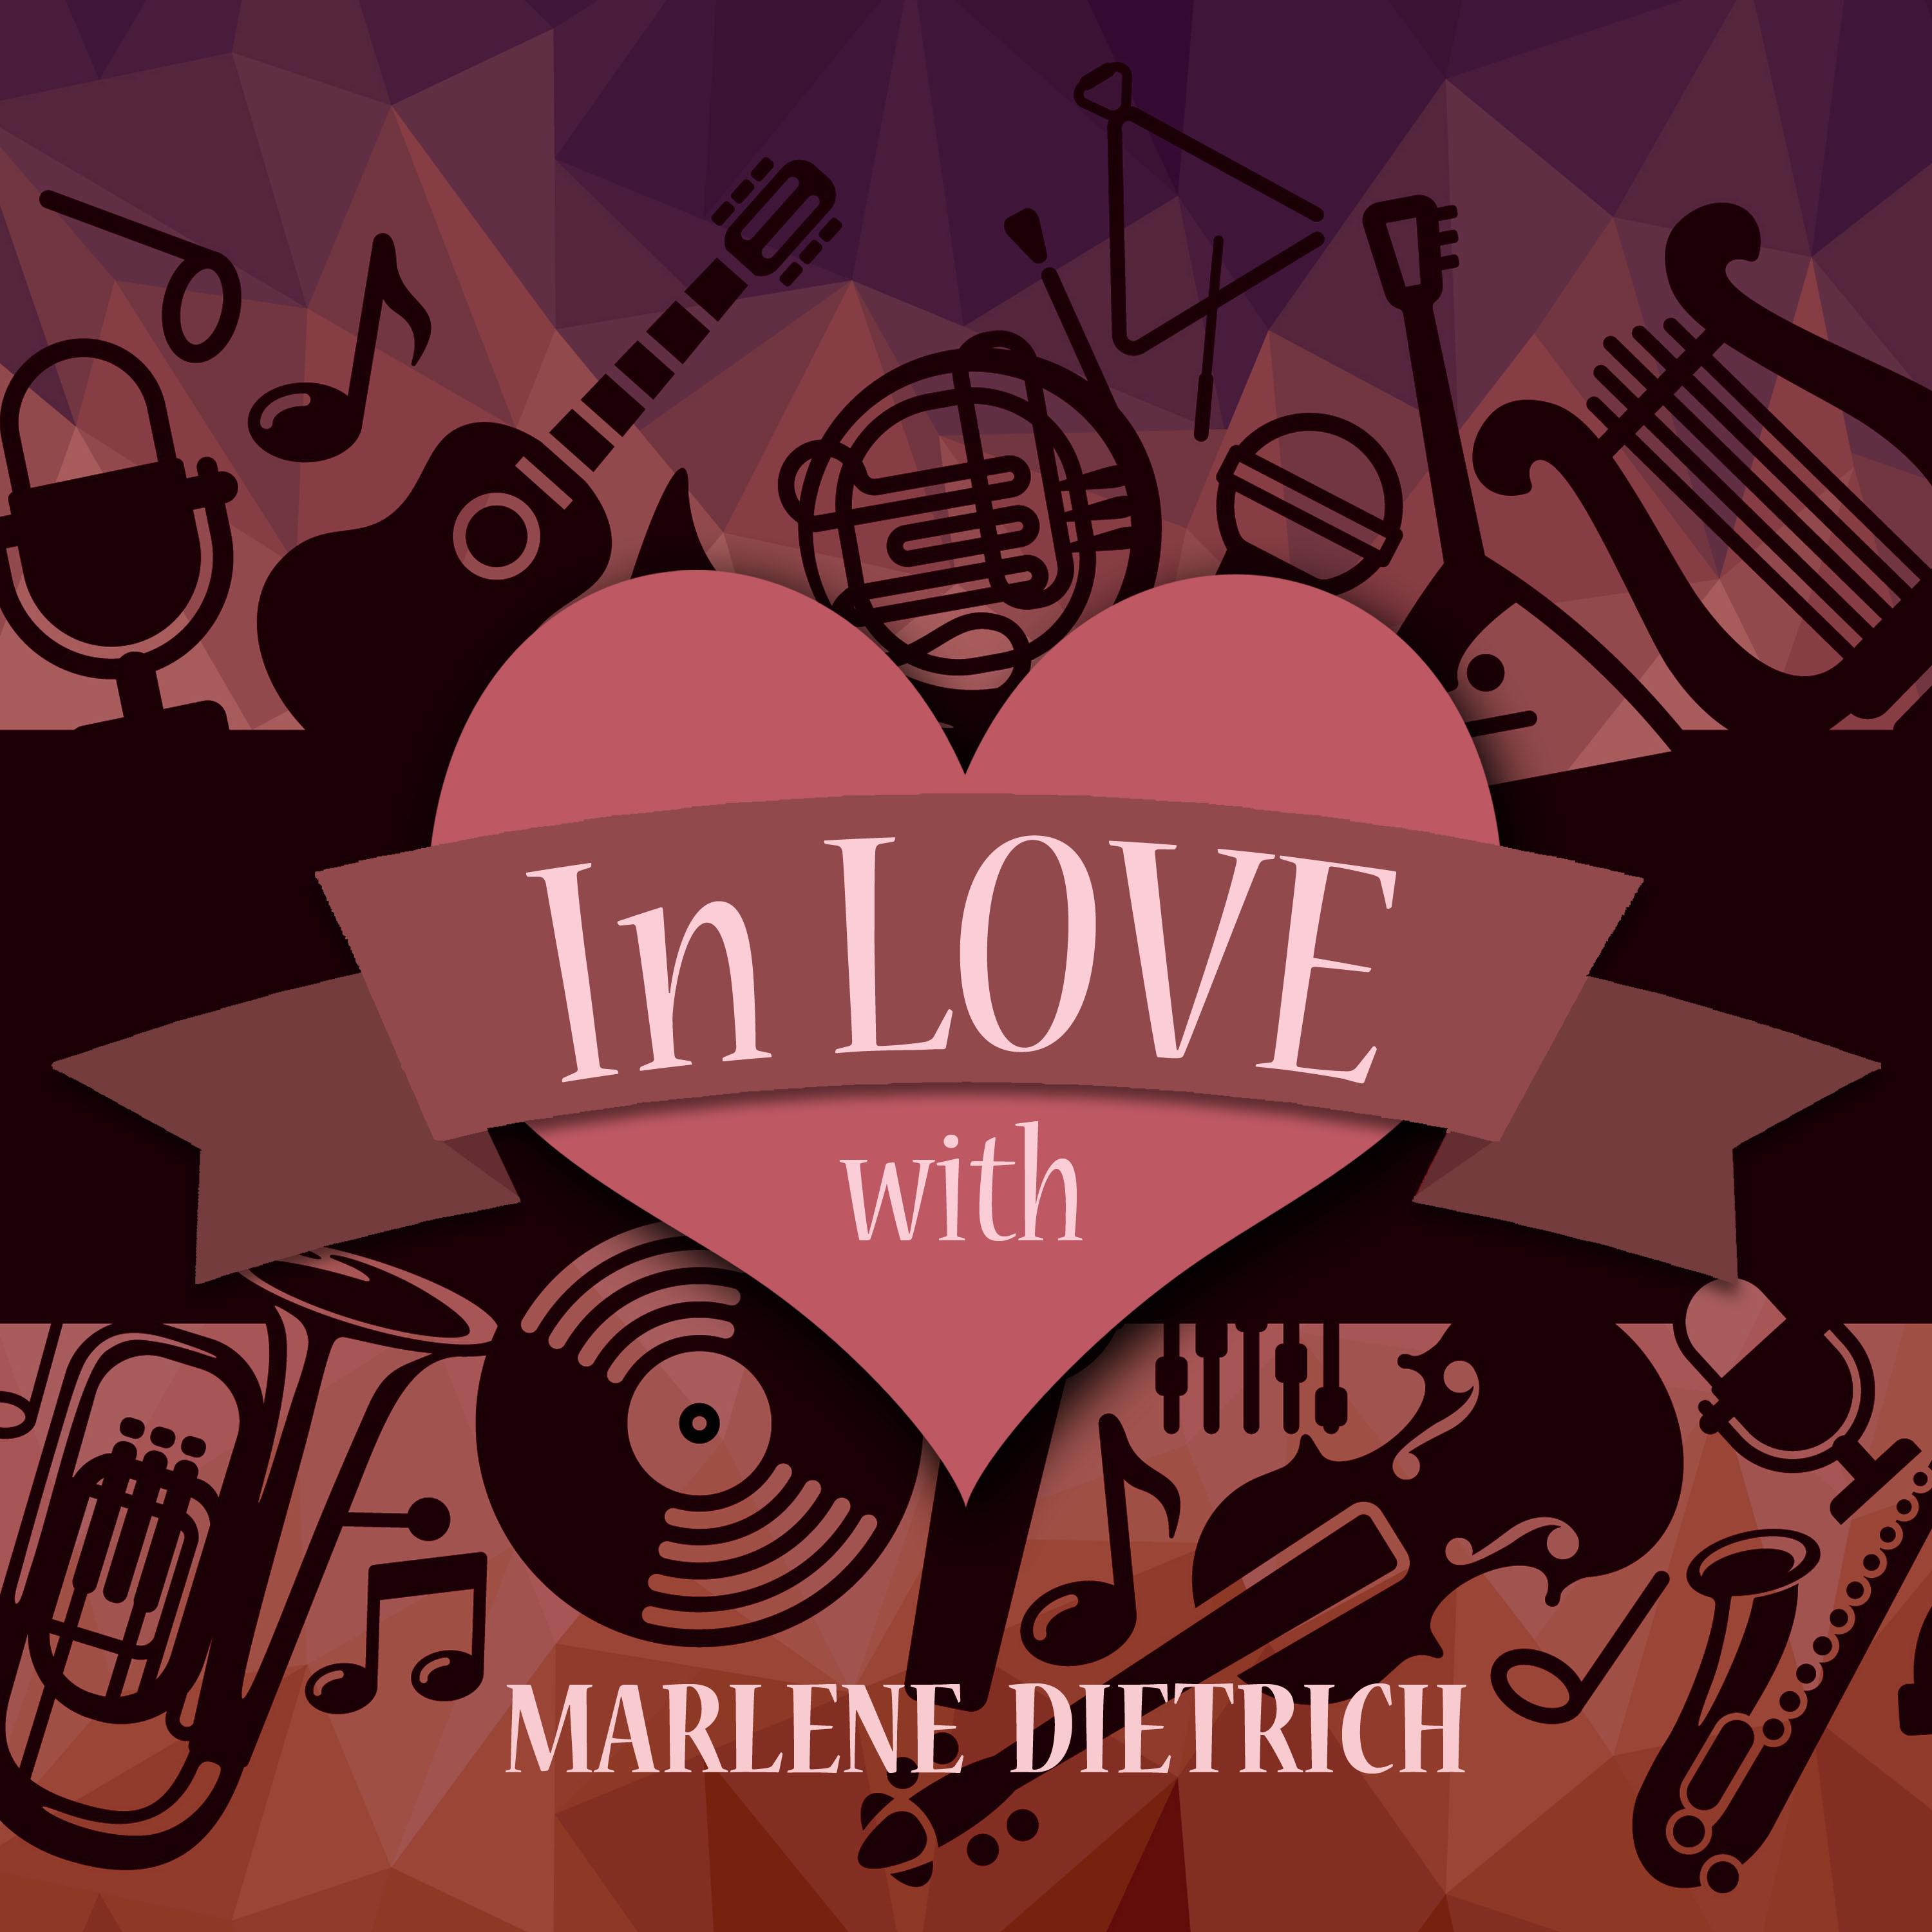 In Love with Marlene Dietrich